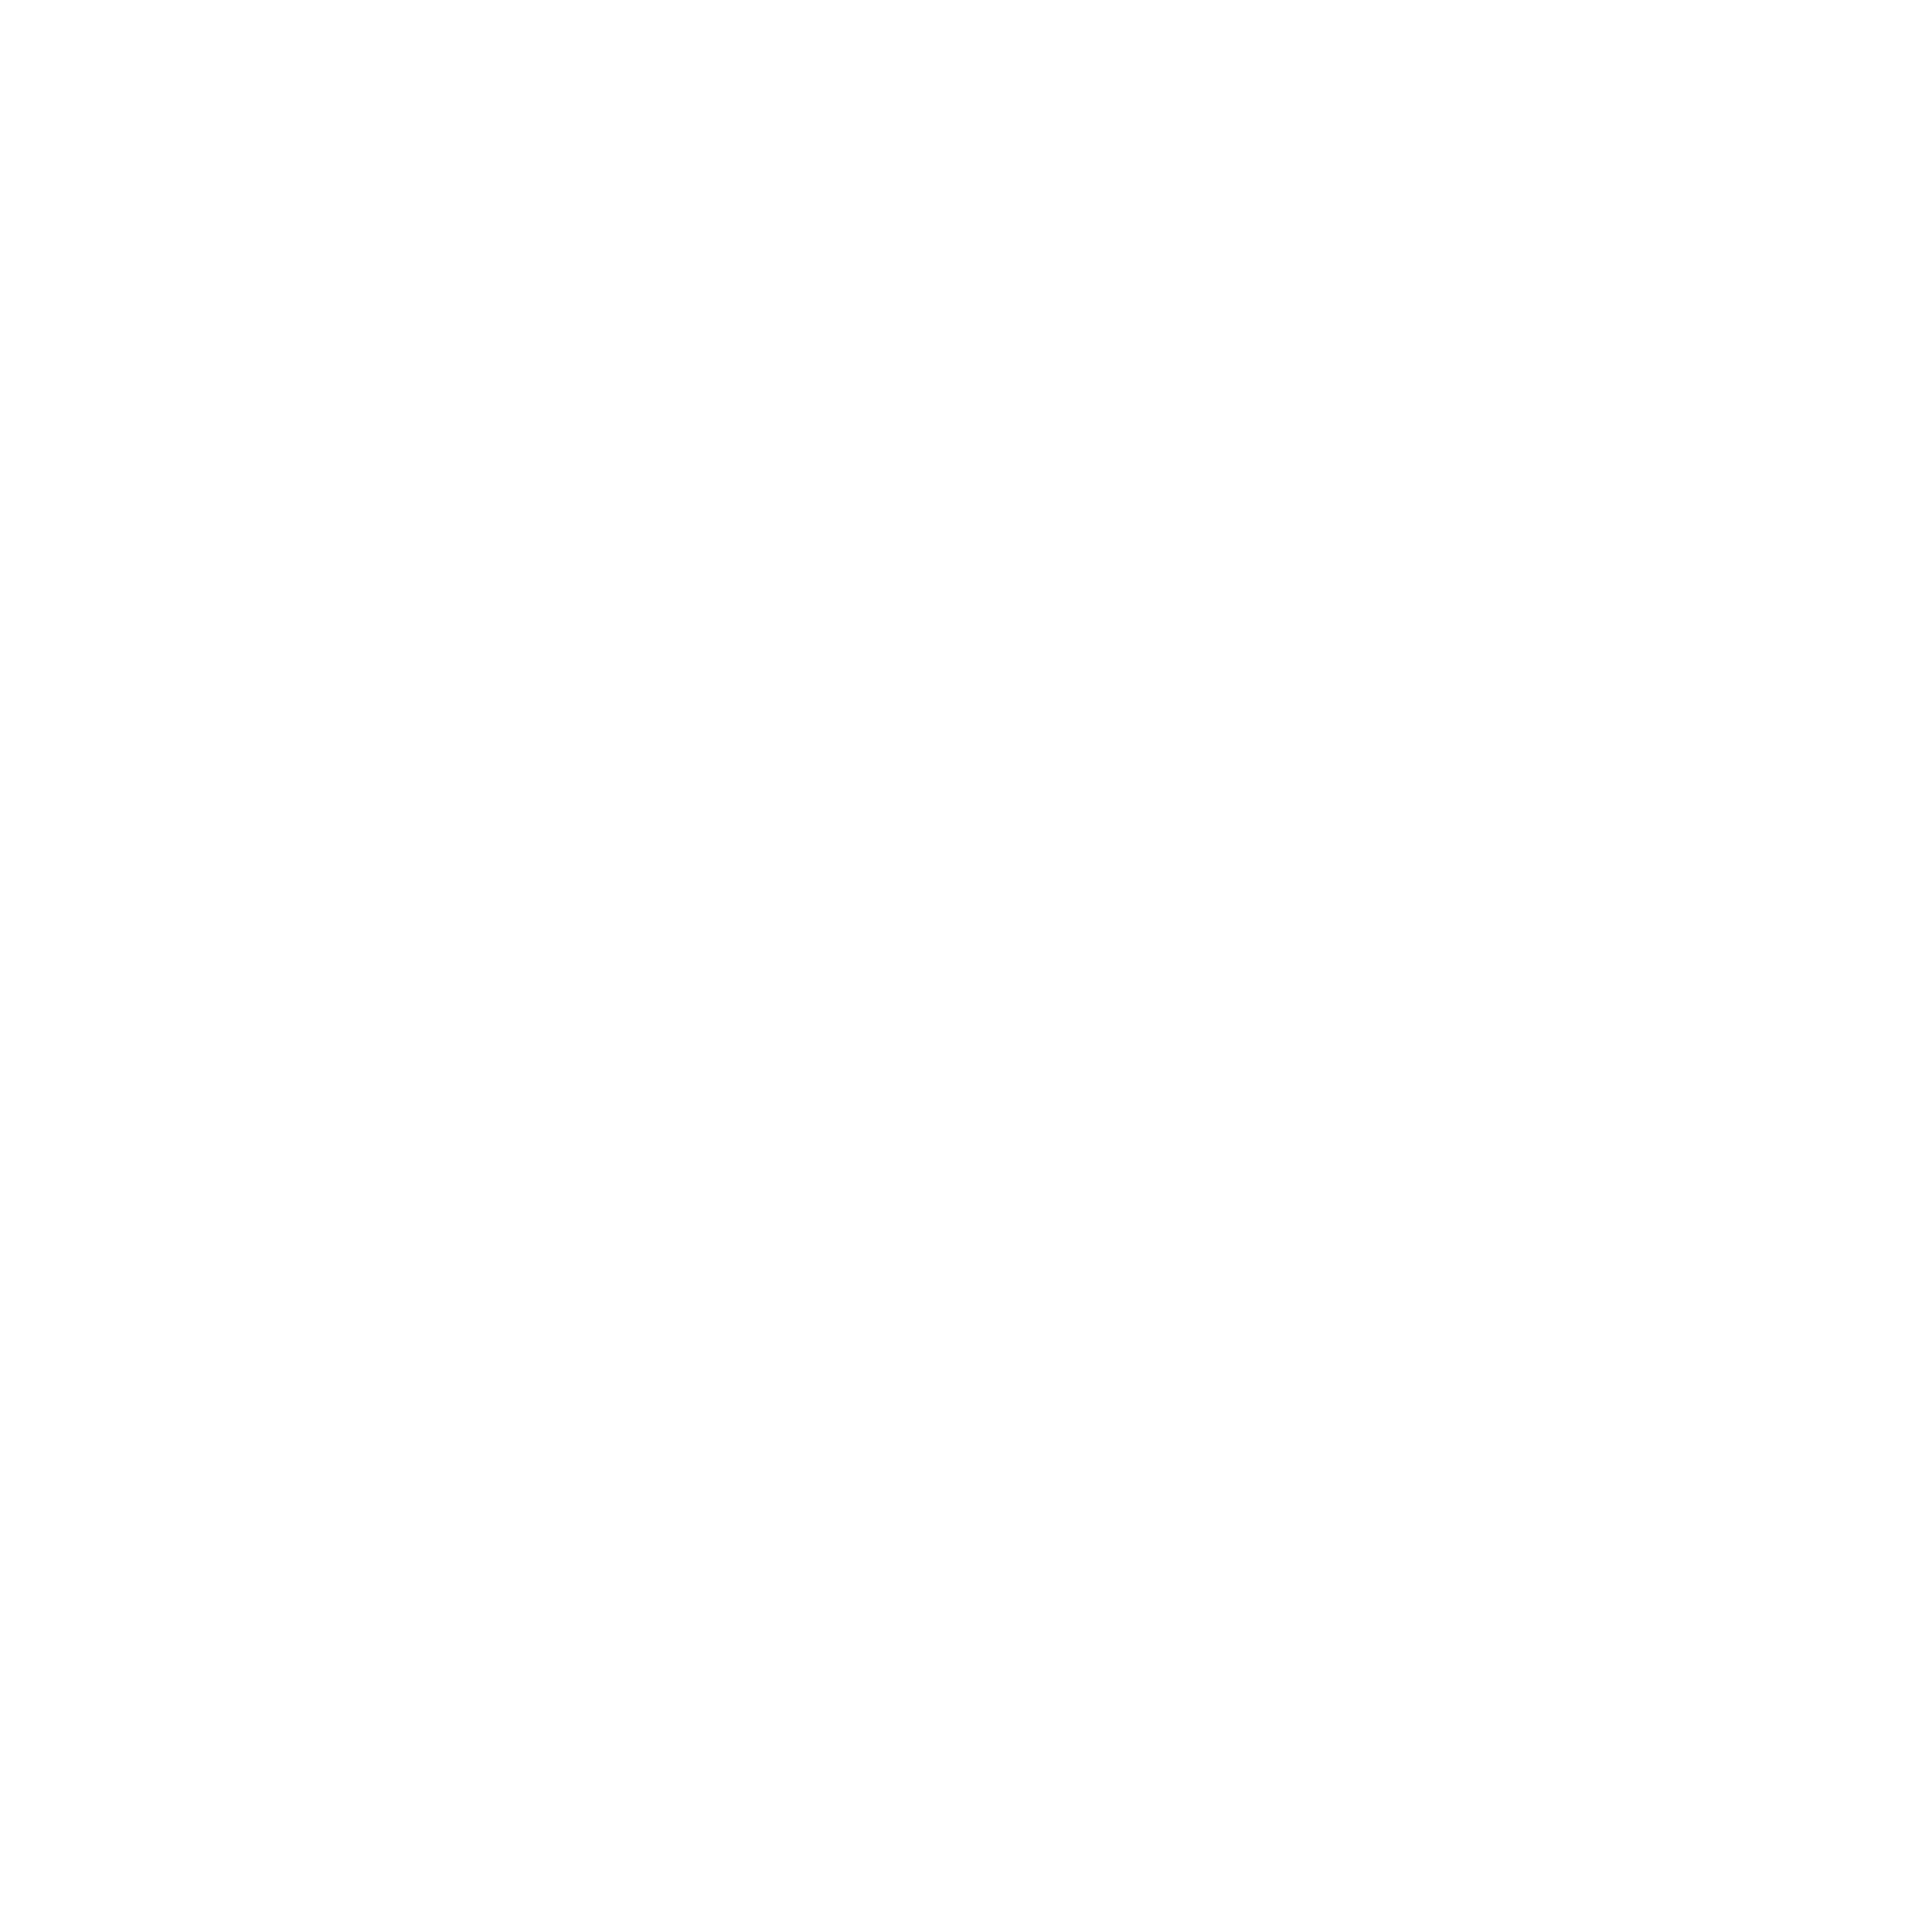 Follow Yamaha on Instagram